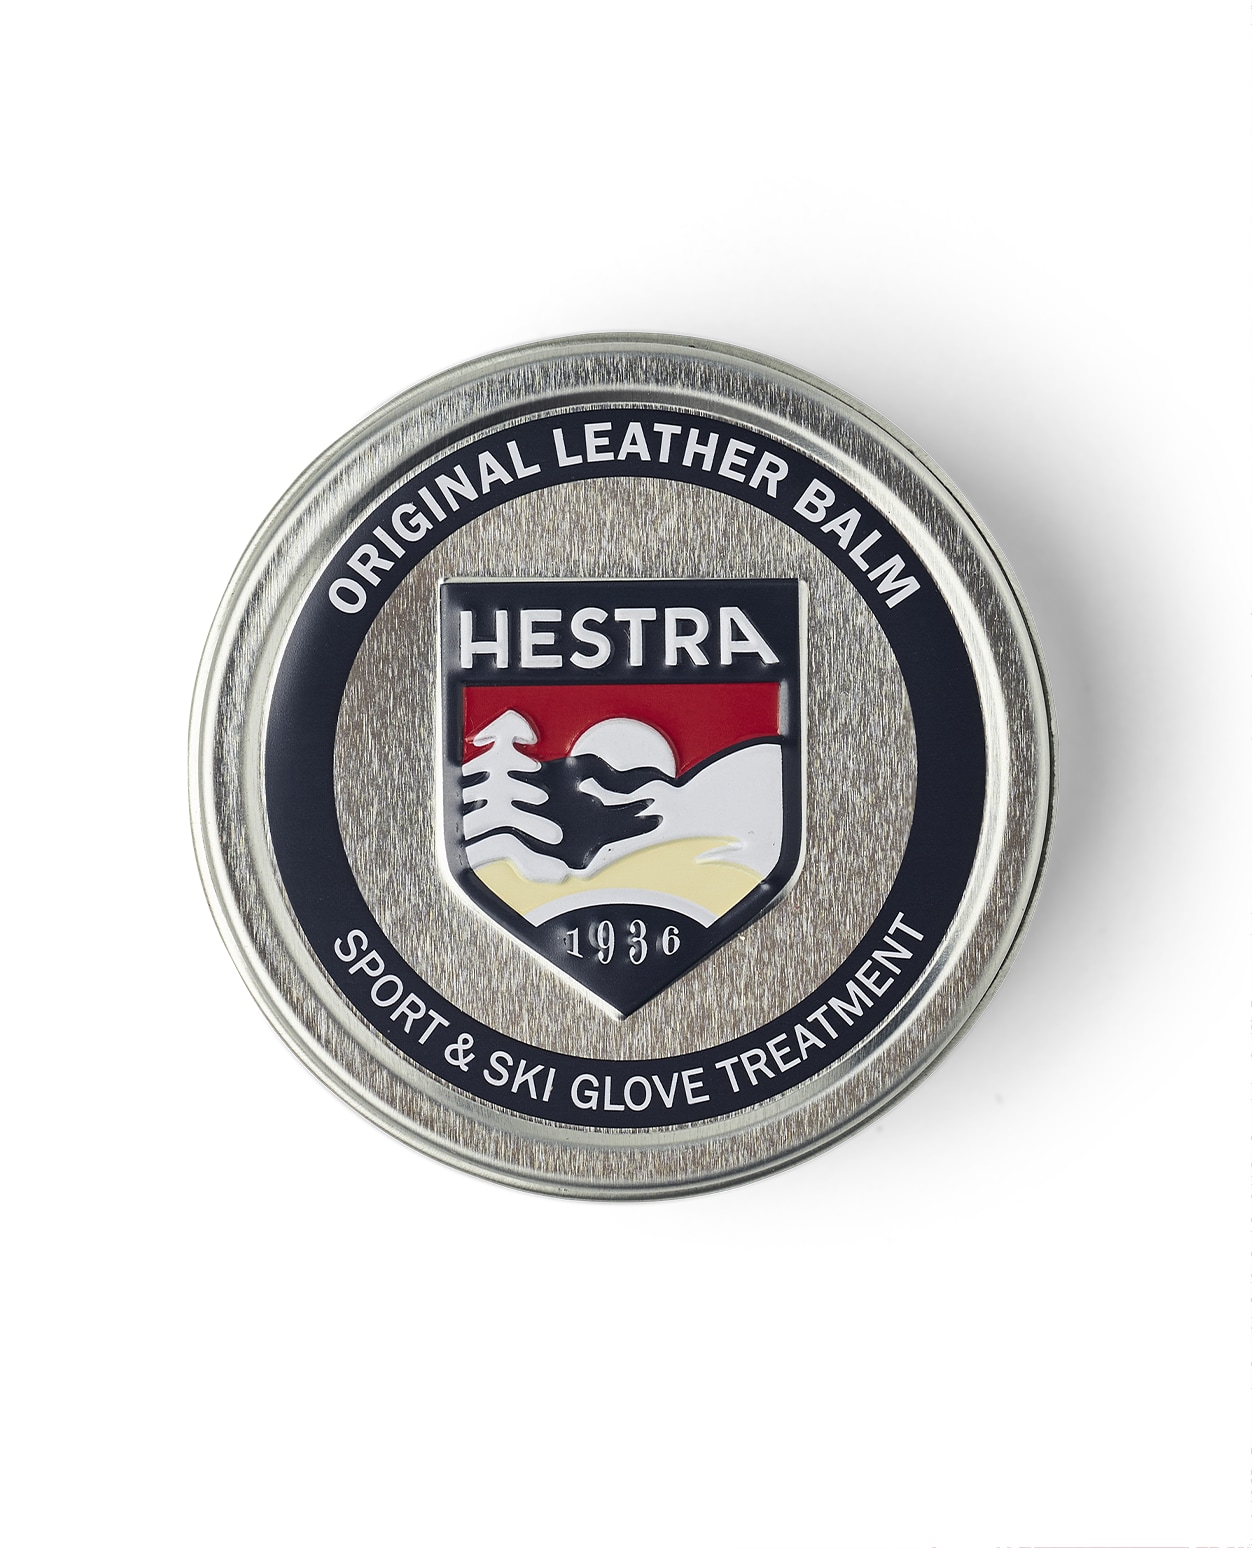 Hestra Leather Balm White